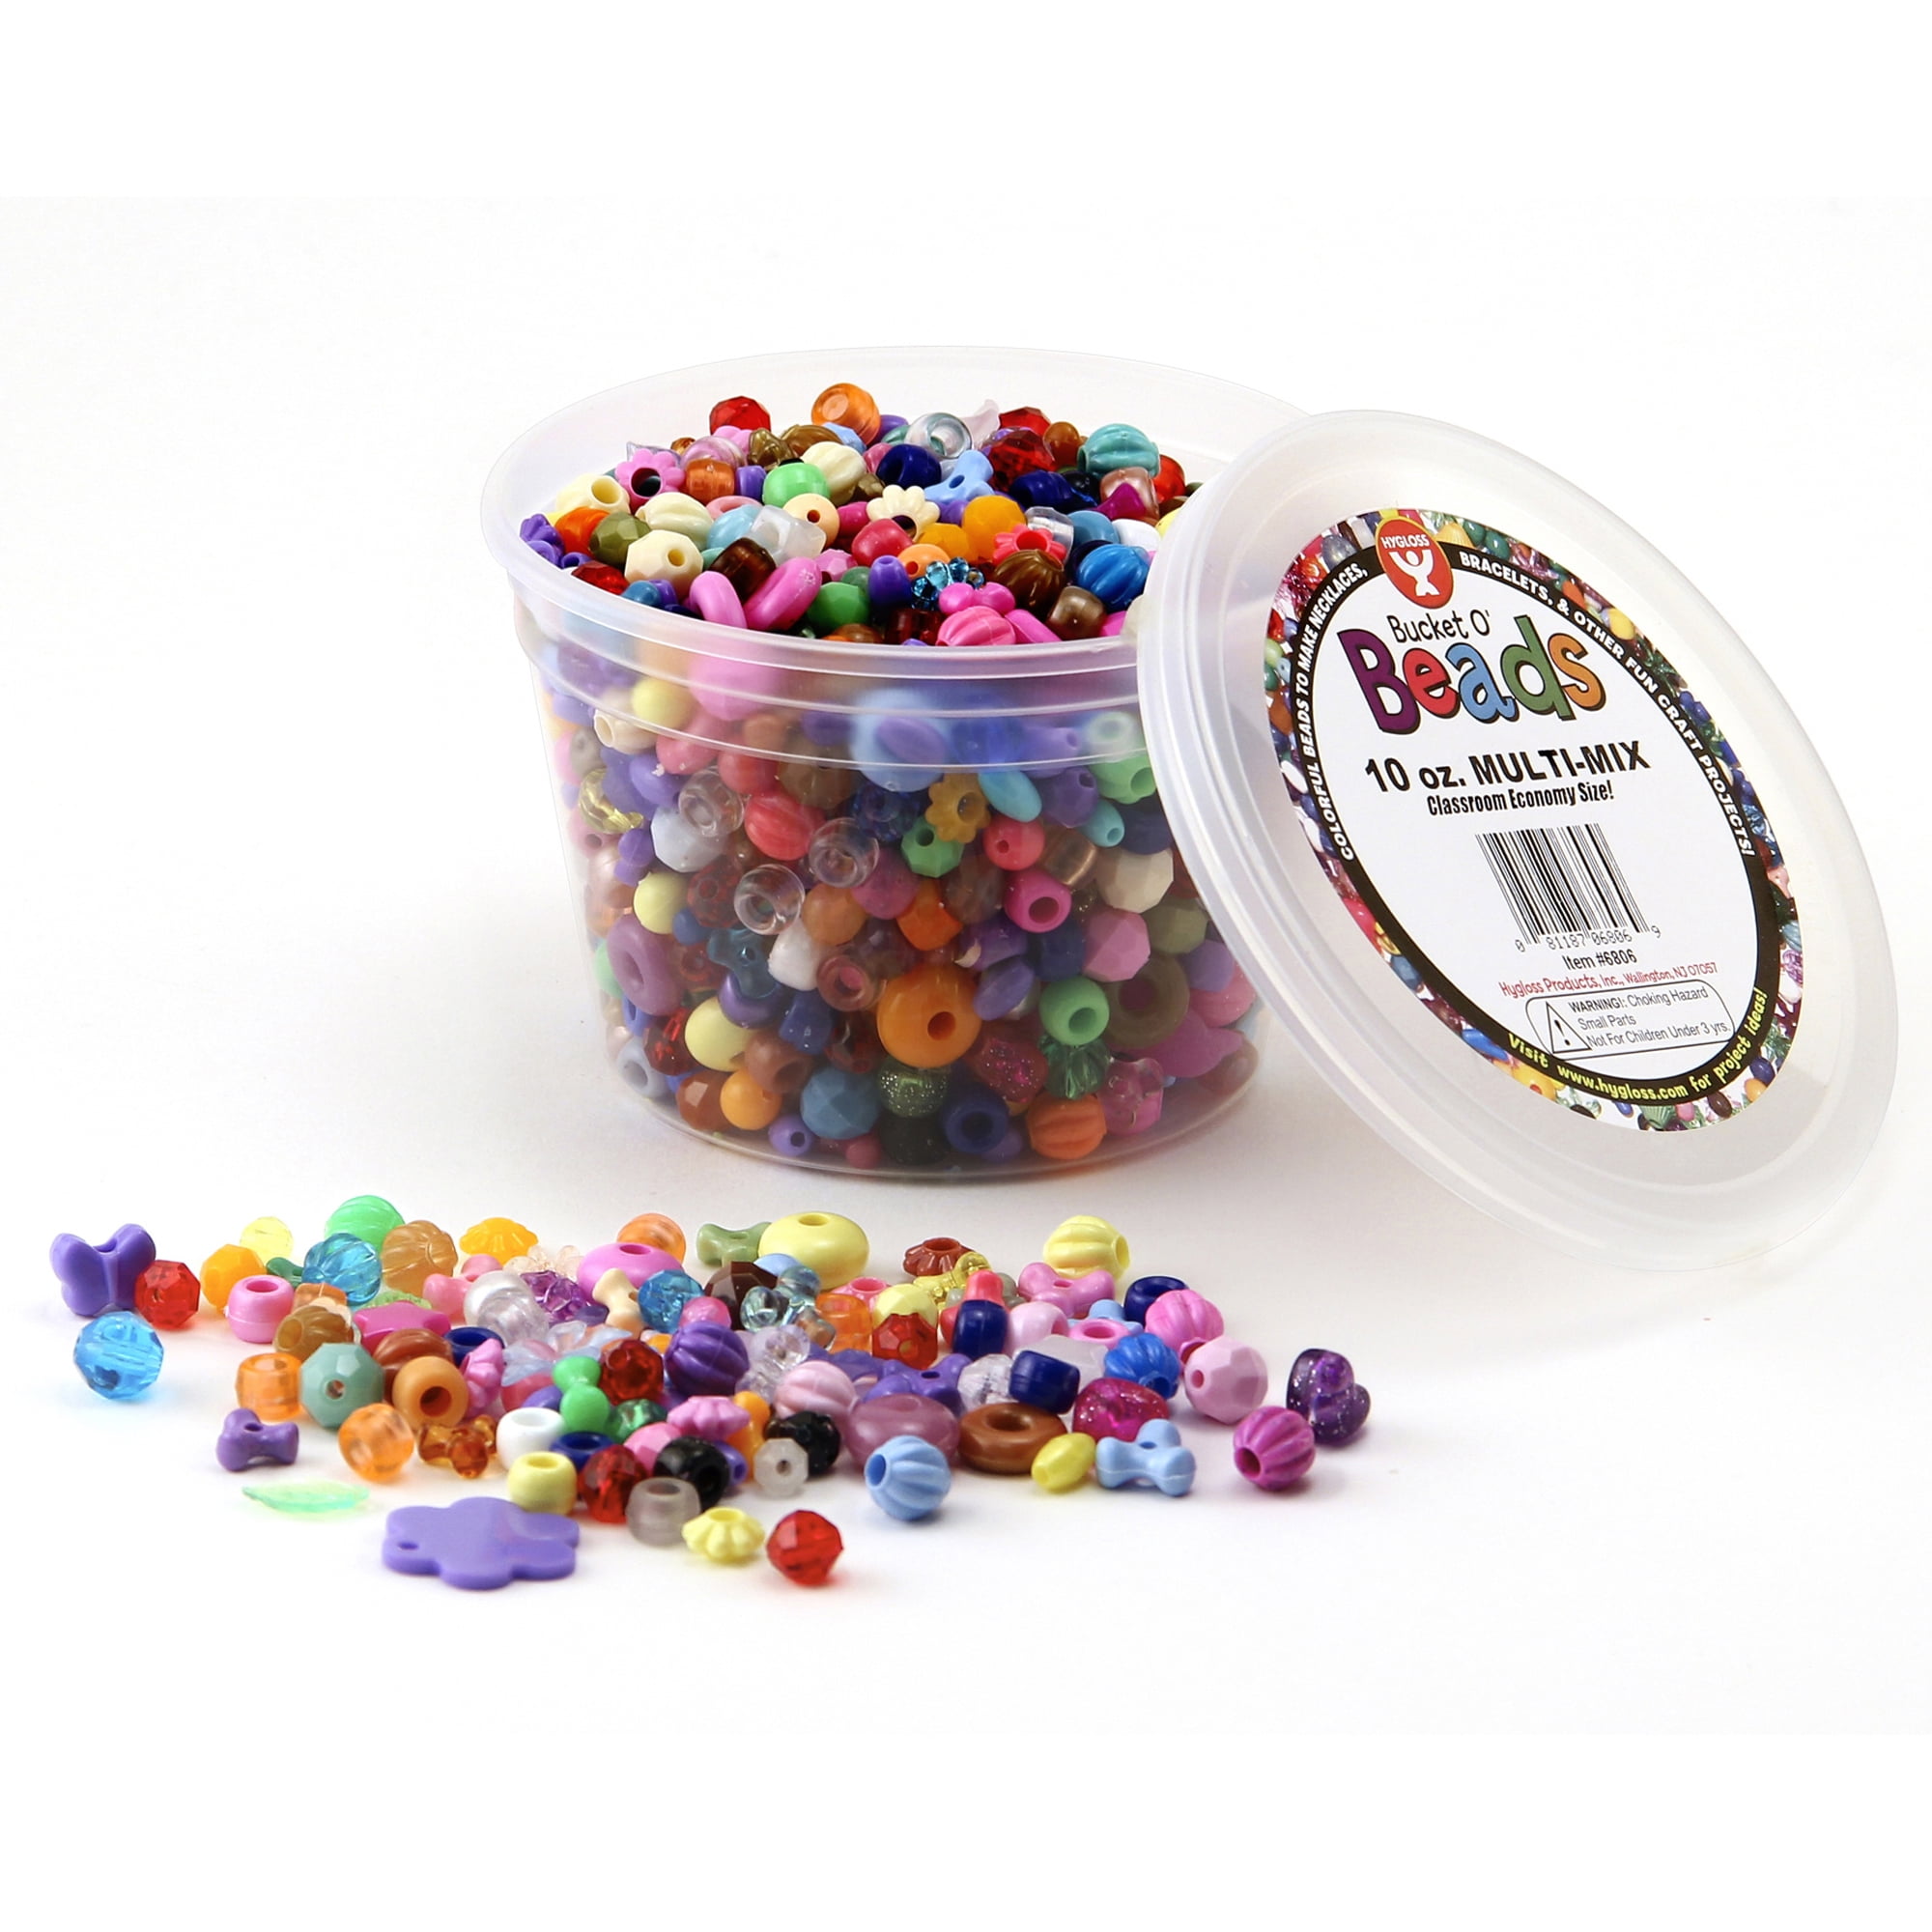 18mm Heart Beads Neon Multi Mix 24pc